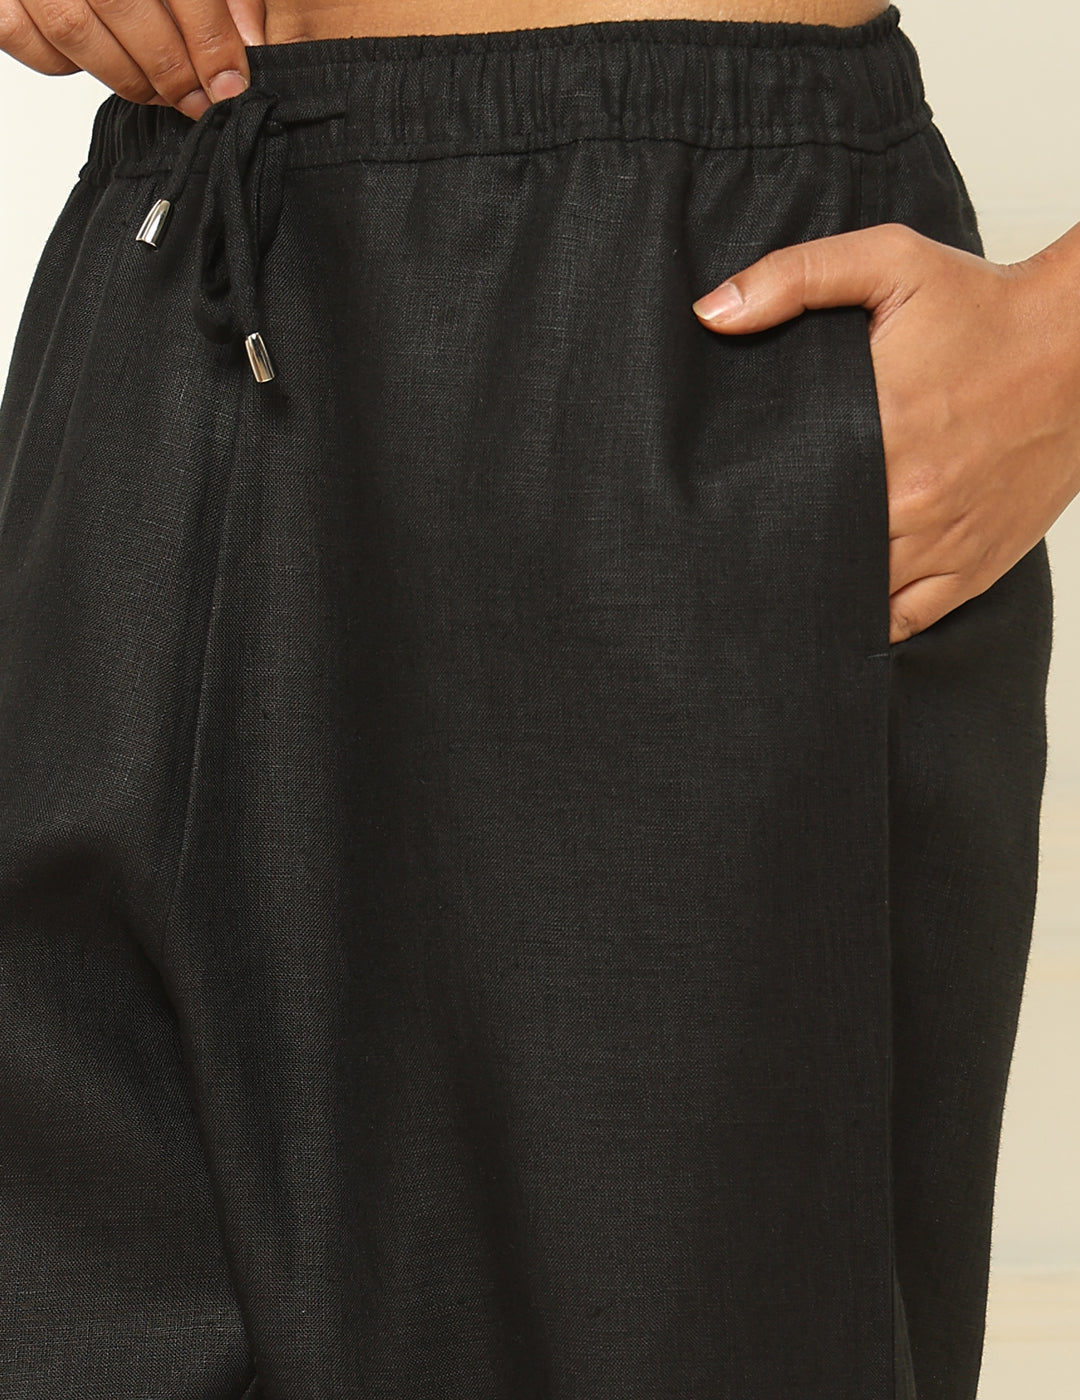 Black Linen Shirt & Tapered Pants